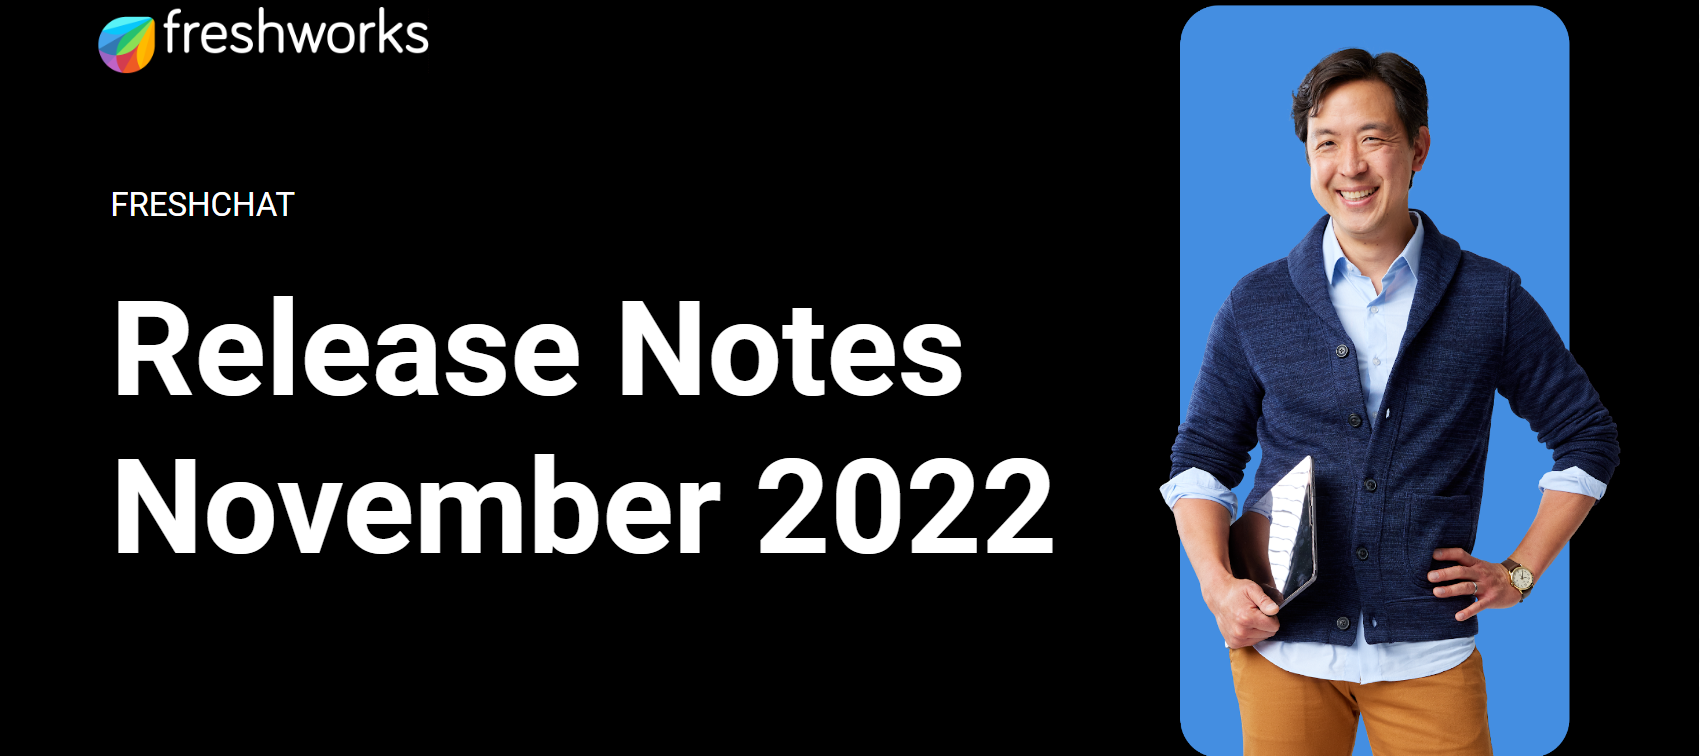 Freshchat Release Notes - November 2022